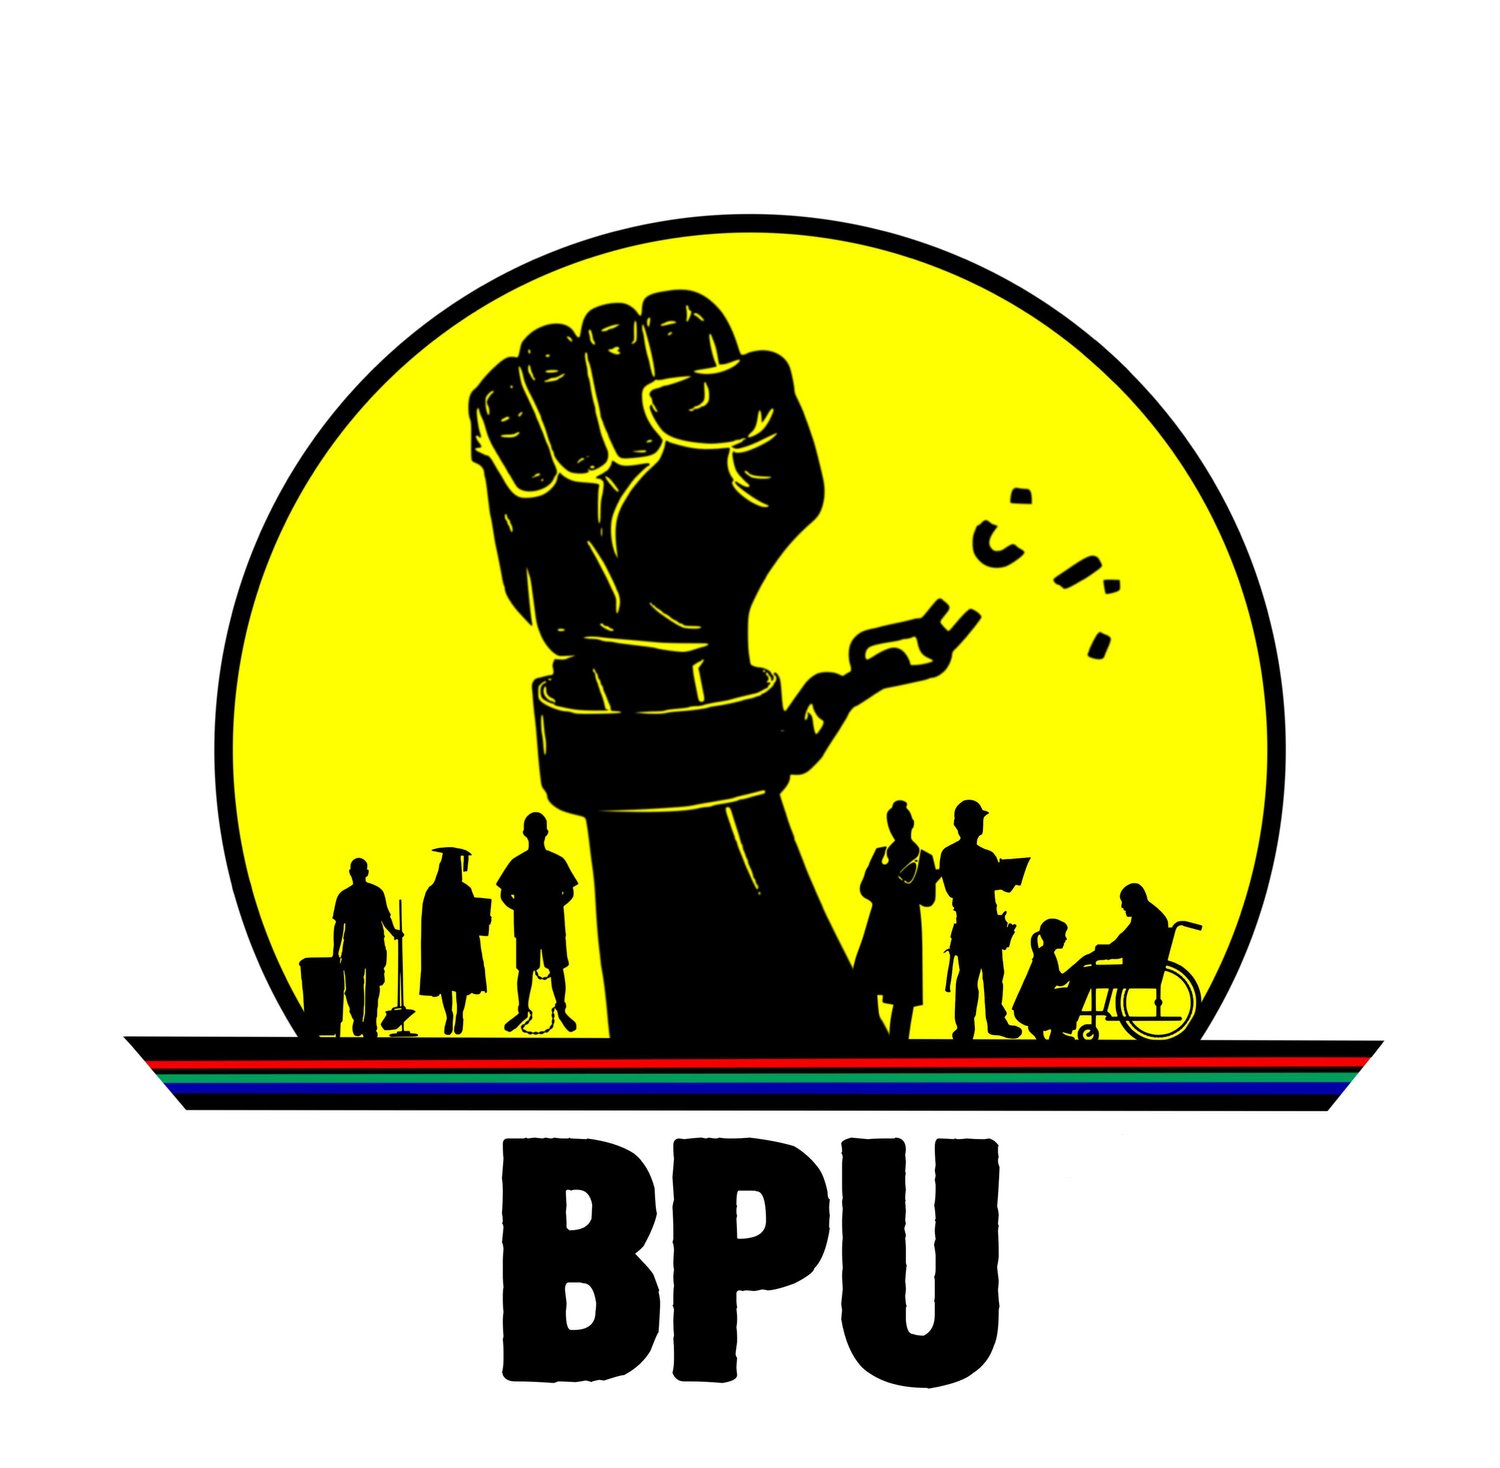 Black Peoples Union